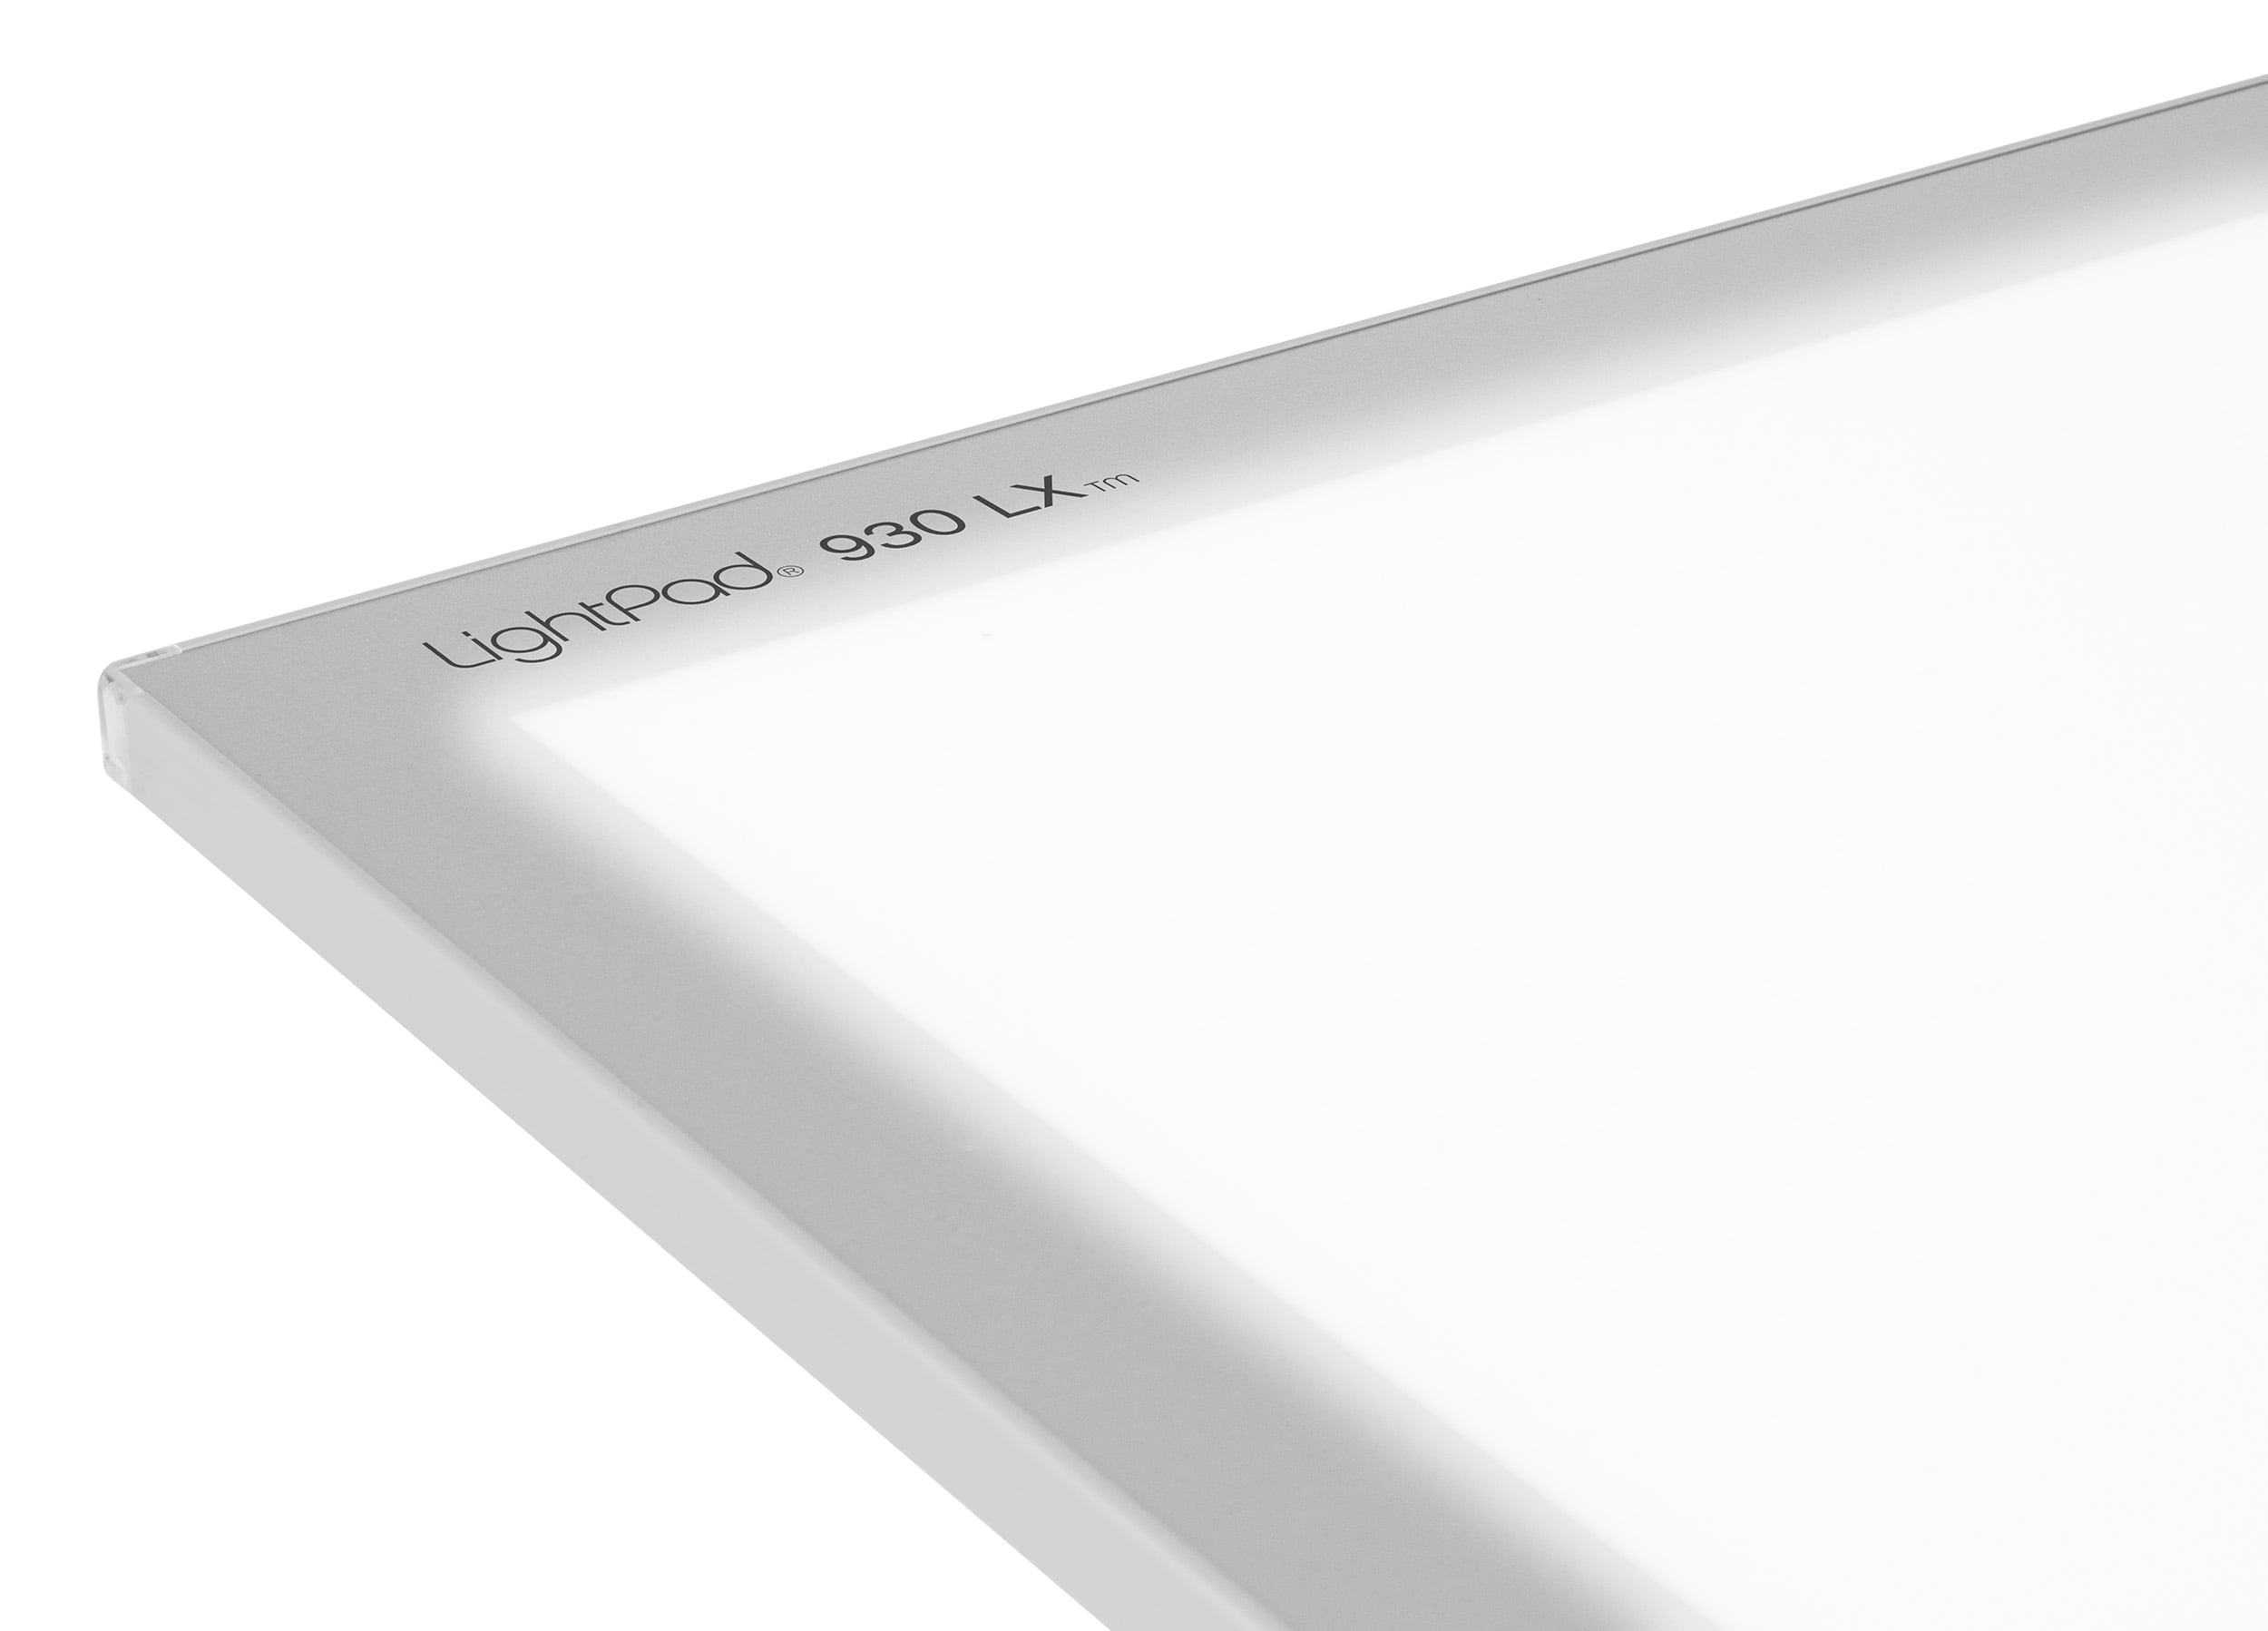 LightPad 920 LX- 9 x 6 LED Light Pad for Artists, Drawing